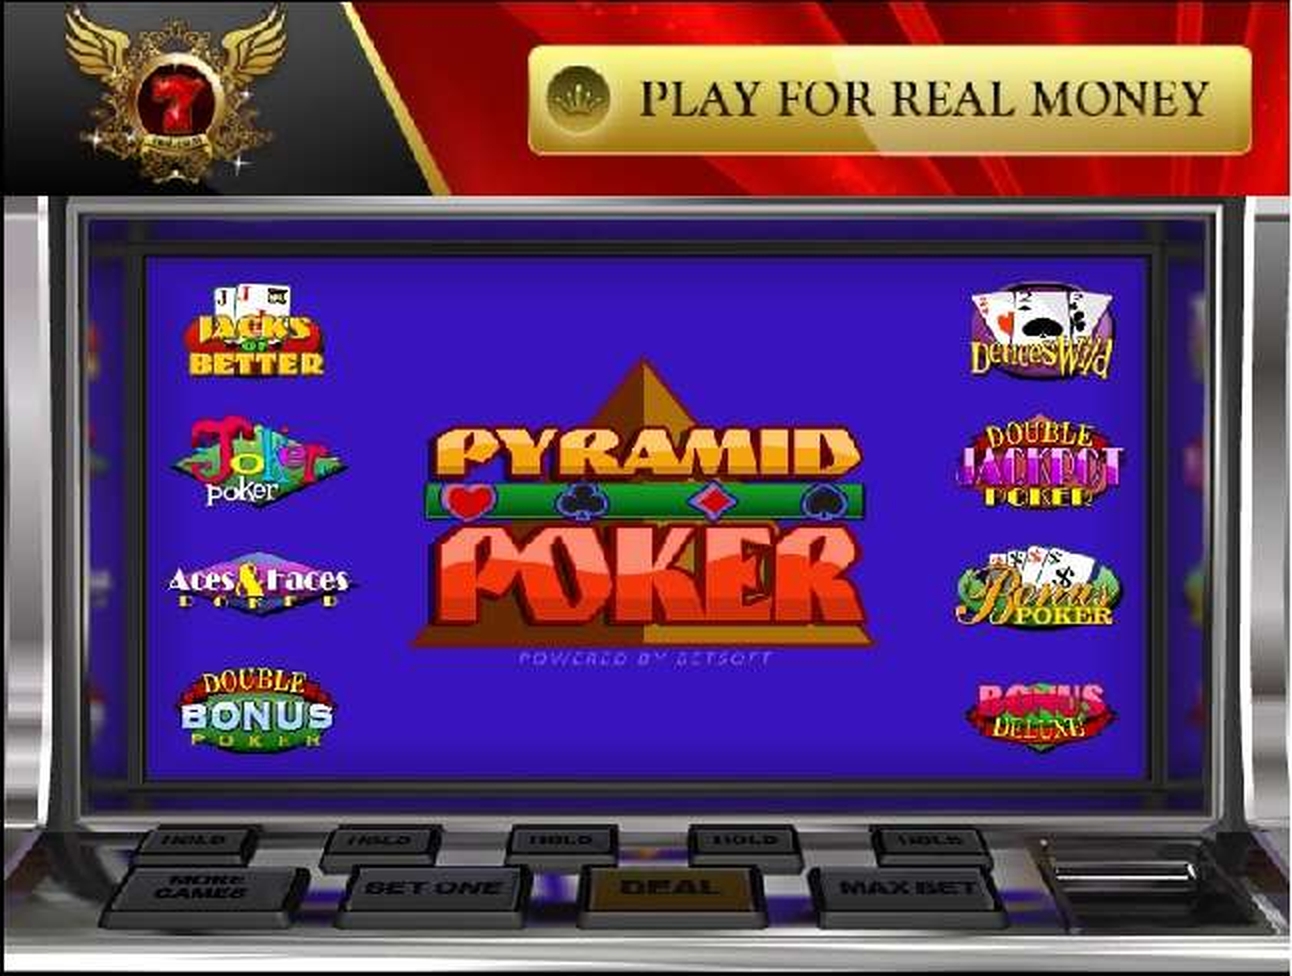 The Pyramid Bonus Poker Online Slot Demo Game by Betsoft